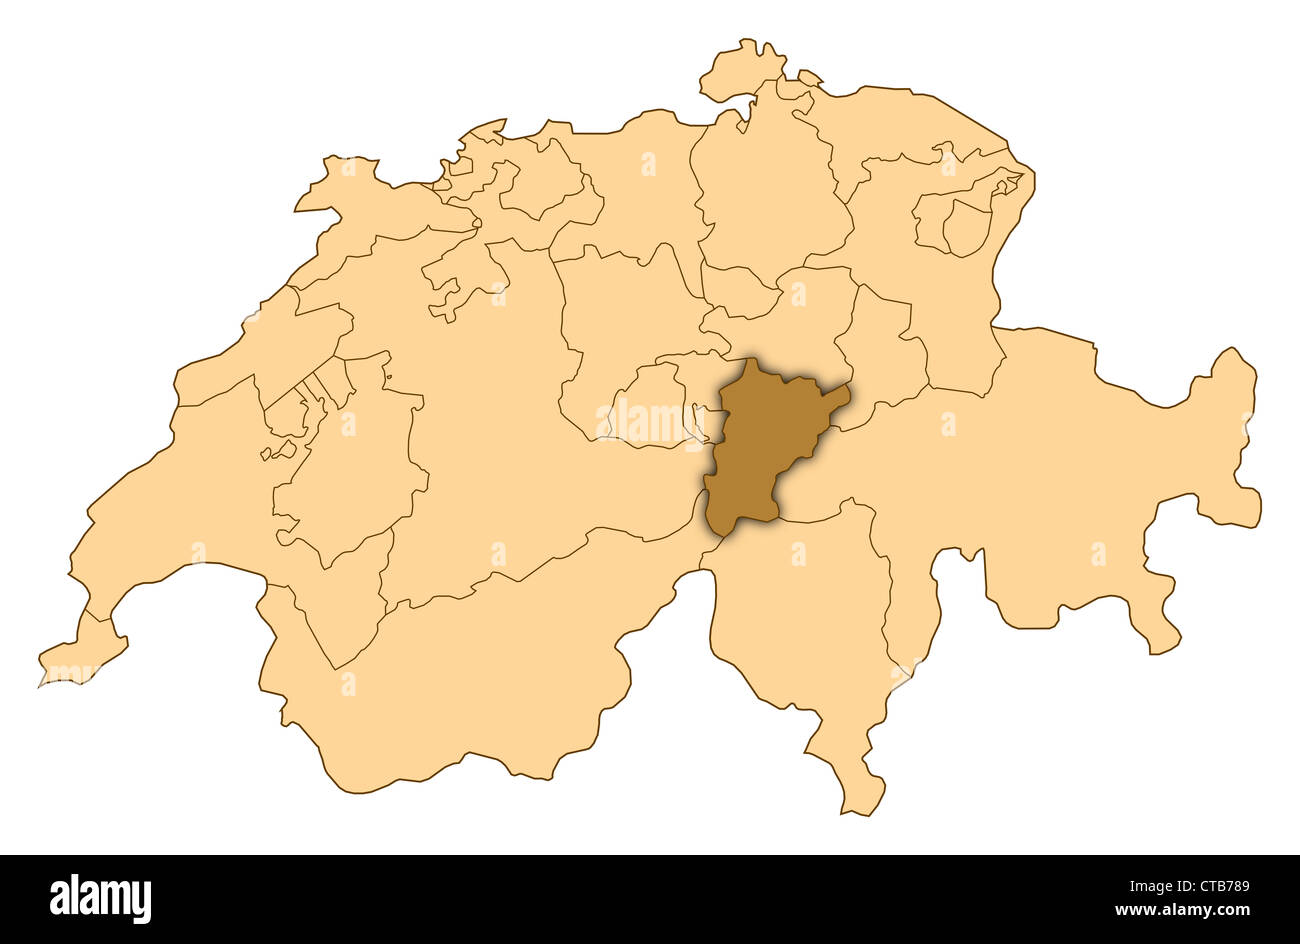 Karte der Schweiz, wo Uri markiert ist Stockfotografie - Alamy